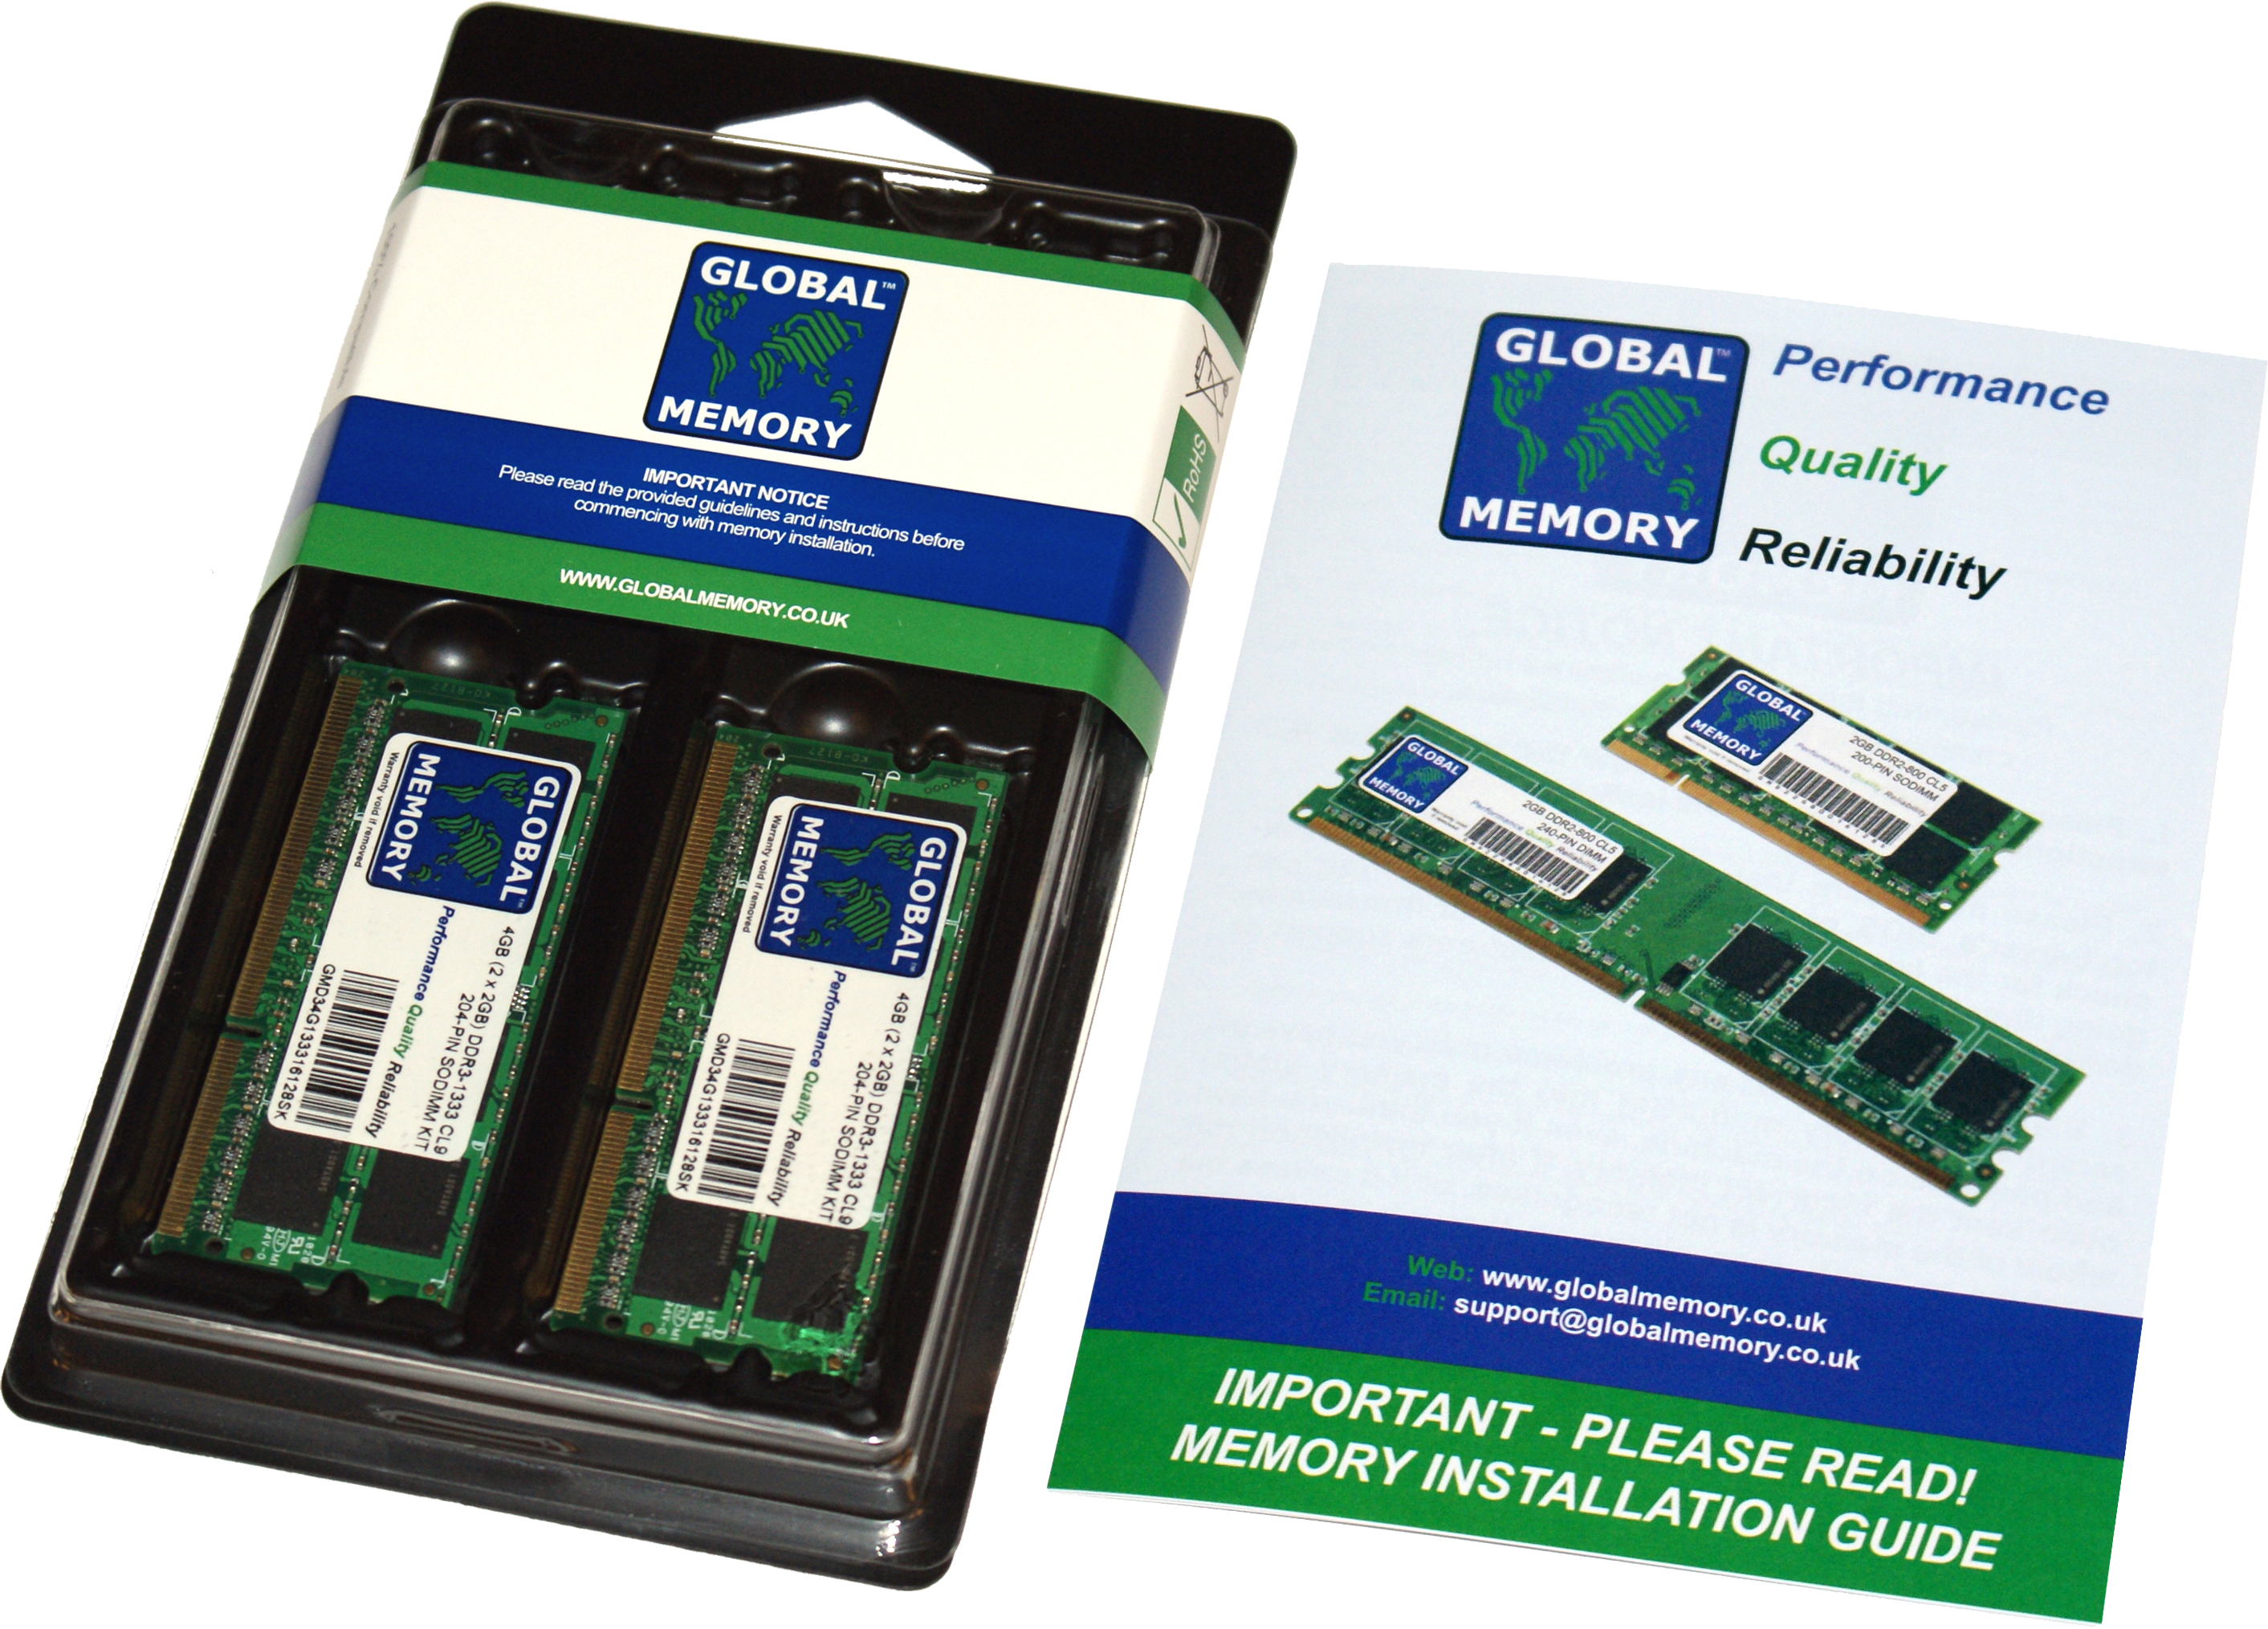 8GB (2 x 4GB) DDR3 1866MHz PC3-14900 204-PIN SODIMM MEMORY RAM KIT FOR ADVENT LAPTOPS/NOTEBOOKS